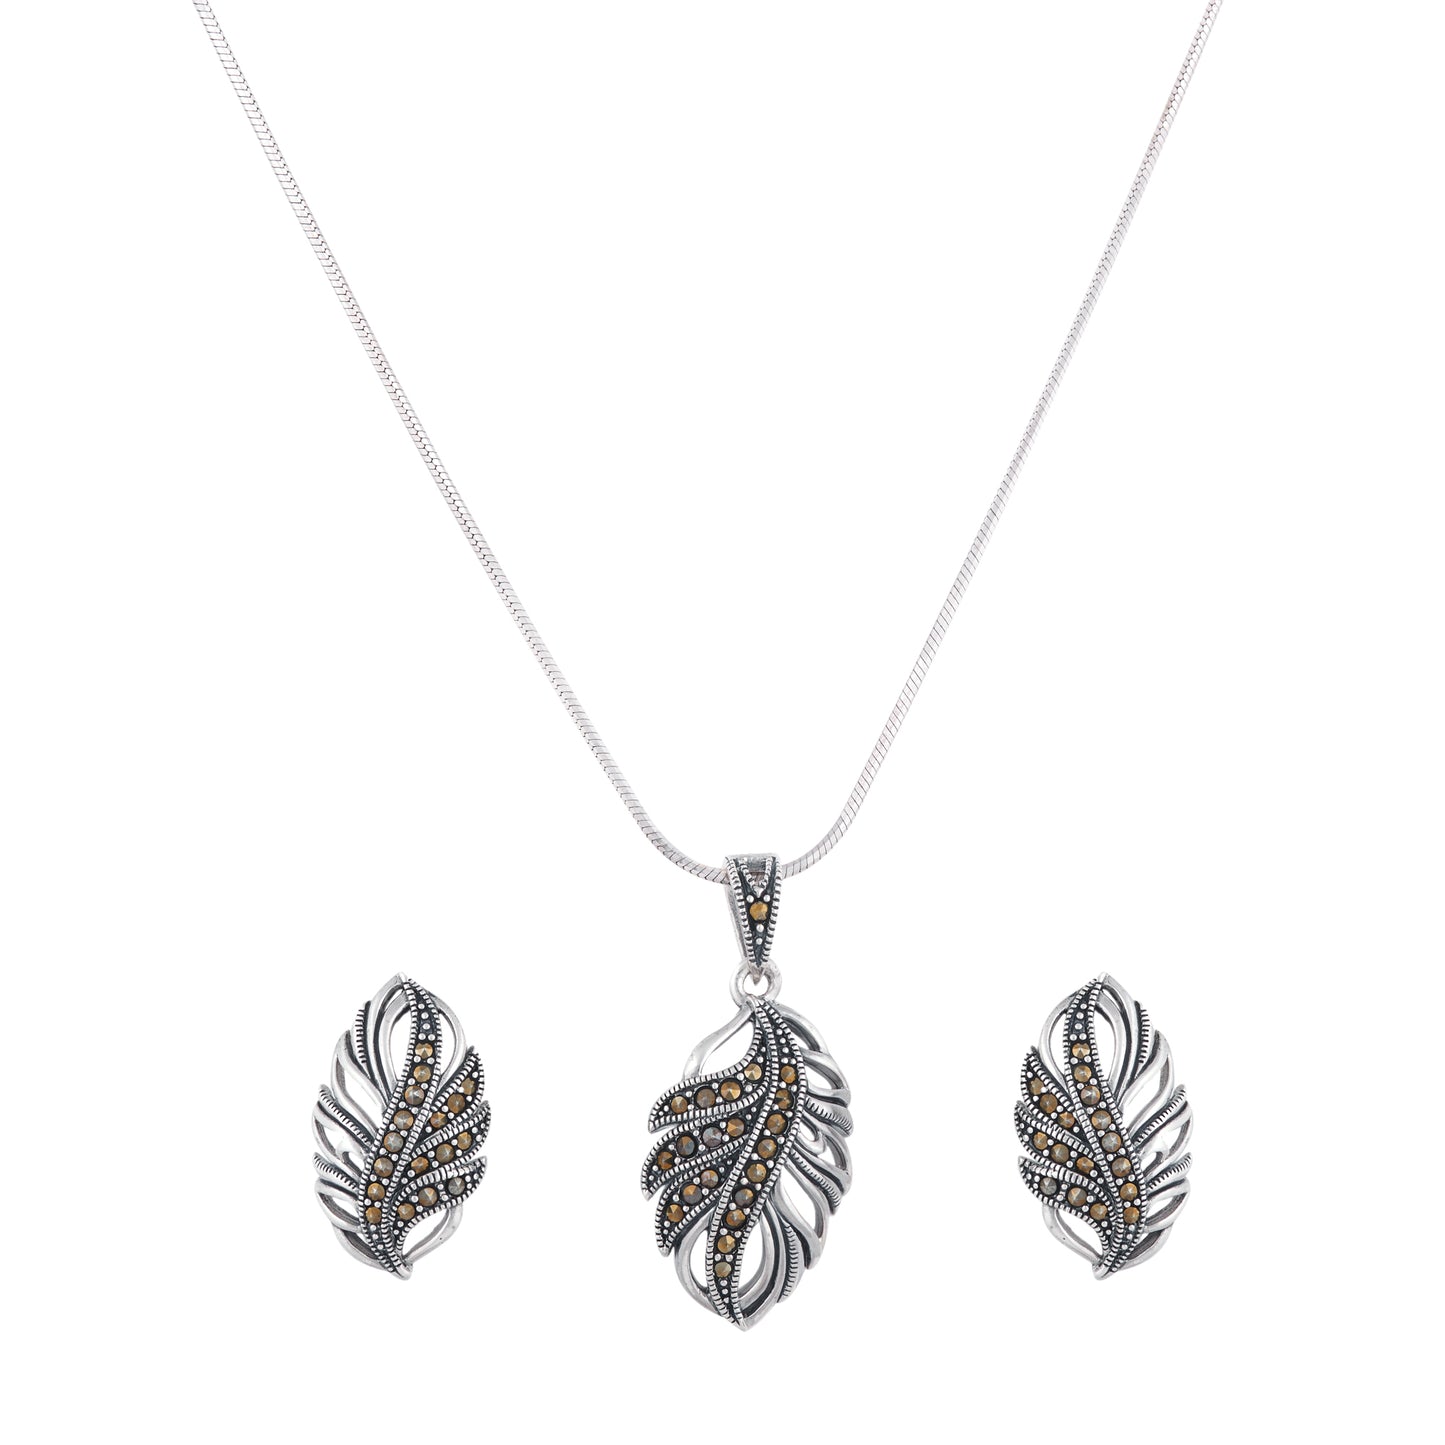 Antique Silver Marcasite Leaf Necklace Set